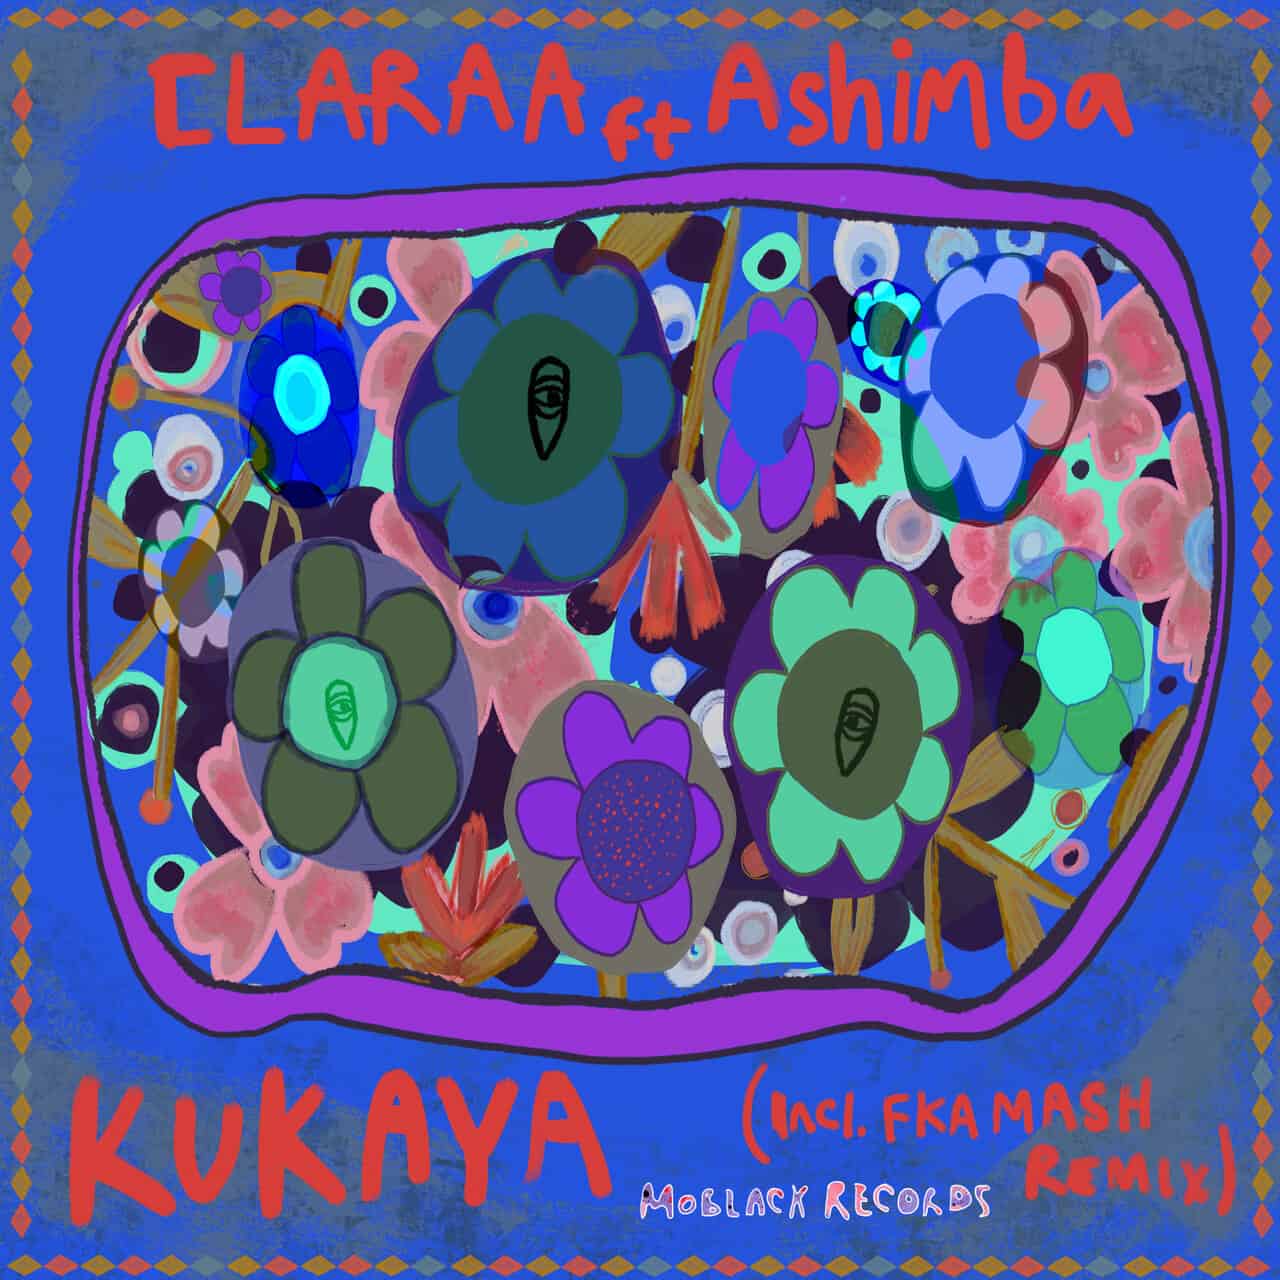 Download Kukaya on Electrobuzz